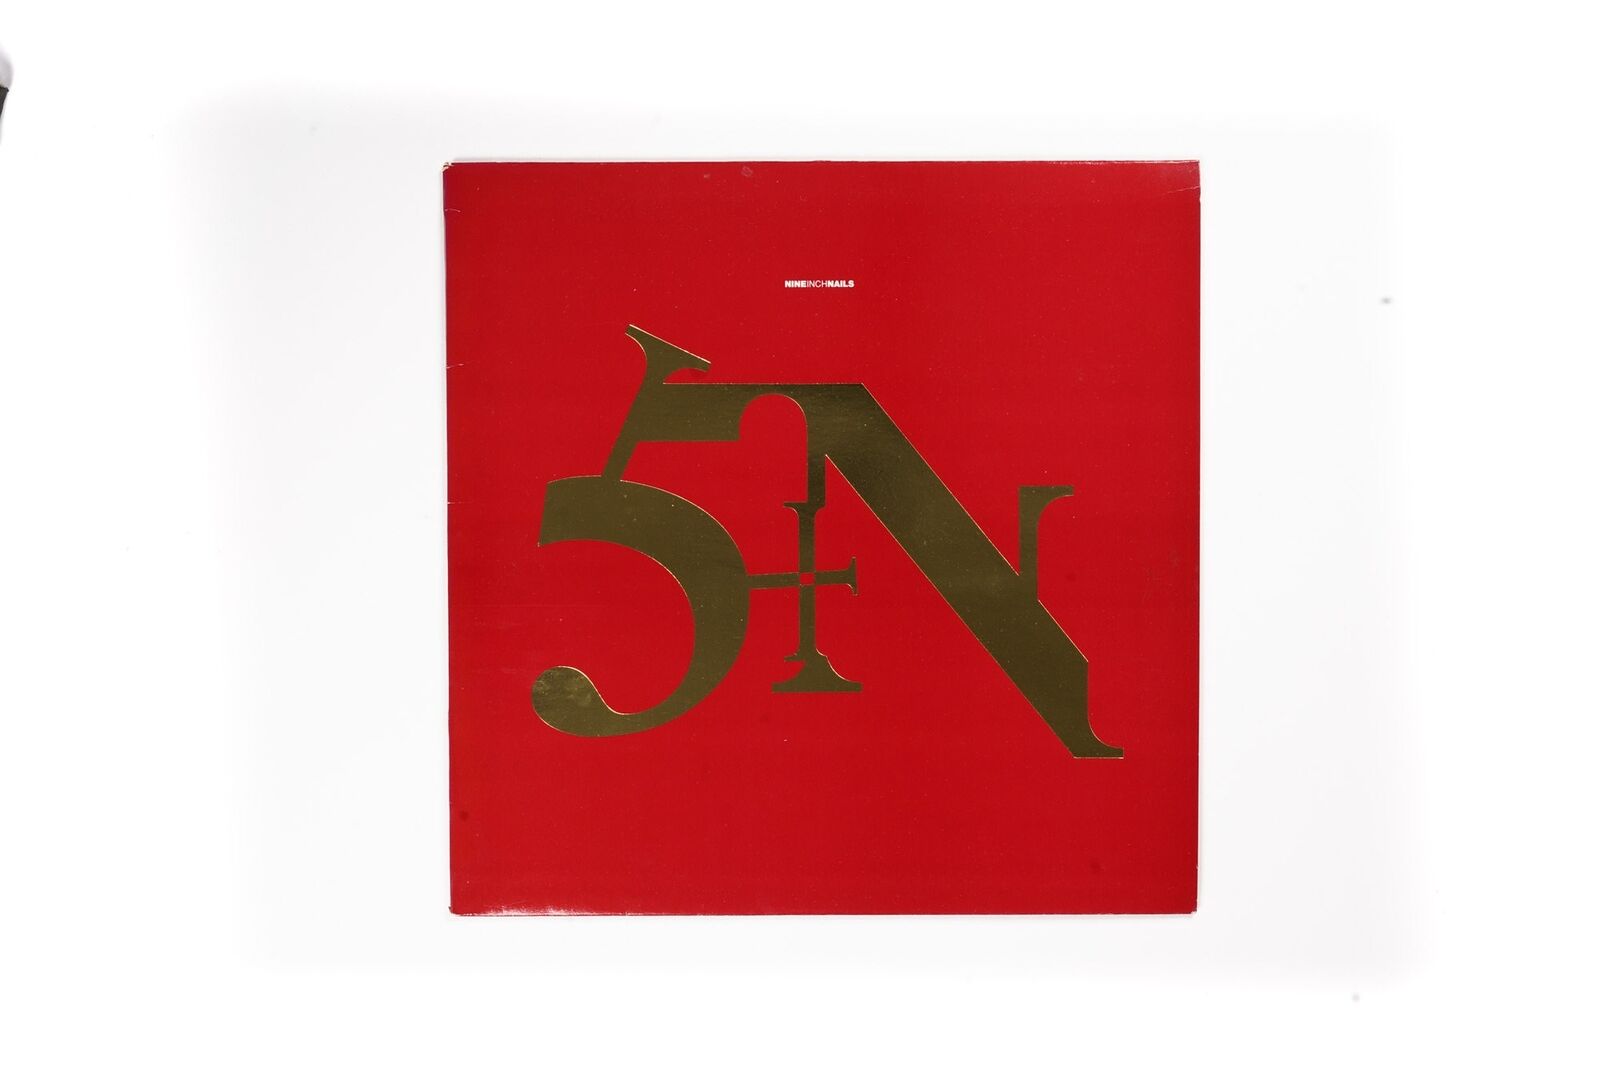 Nine Inch Nails - Sin - Vinyl LP Record - 1990 - First Pressing